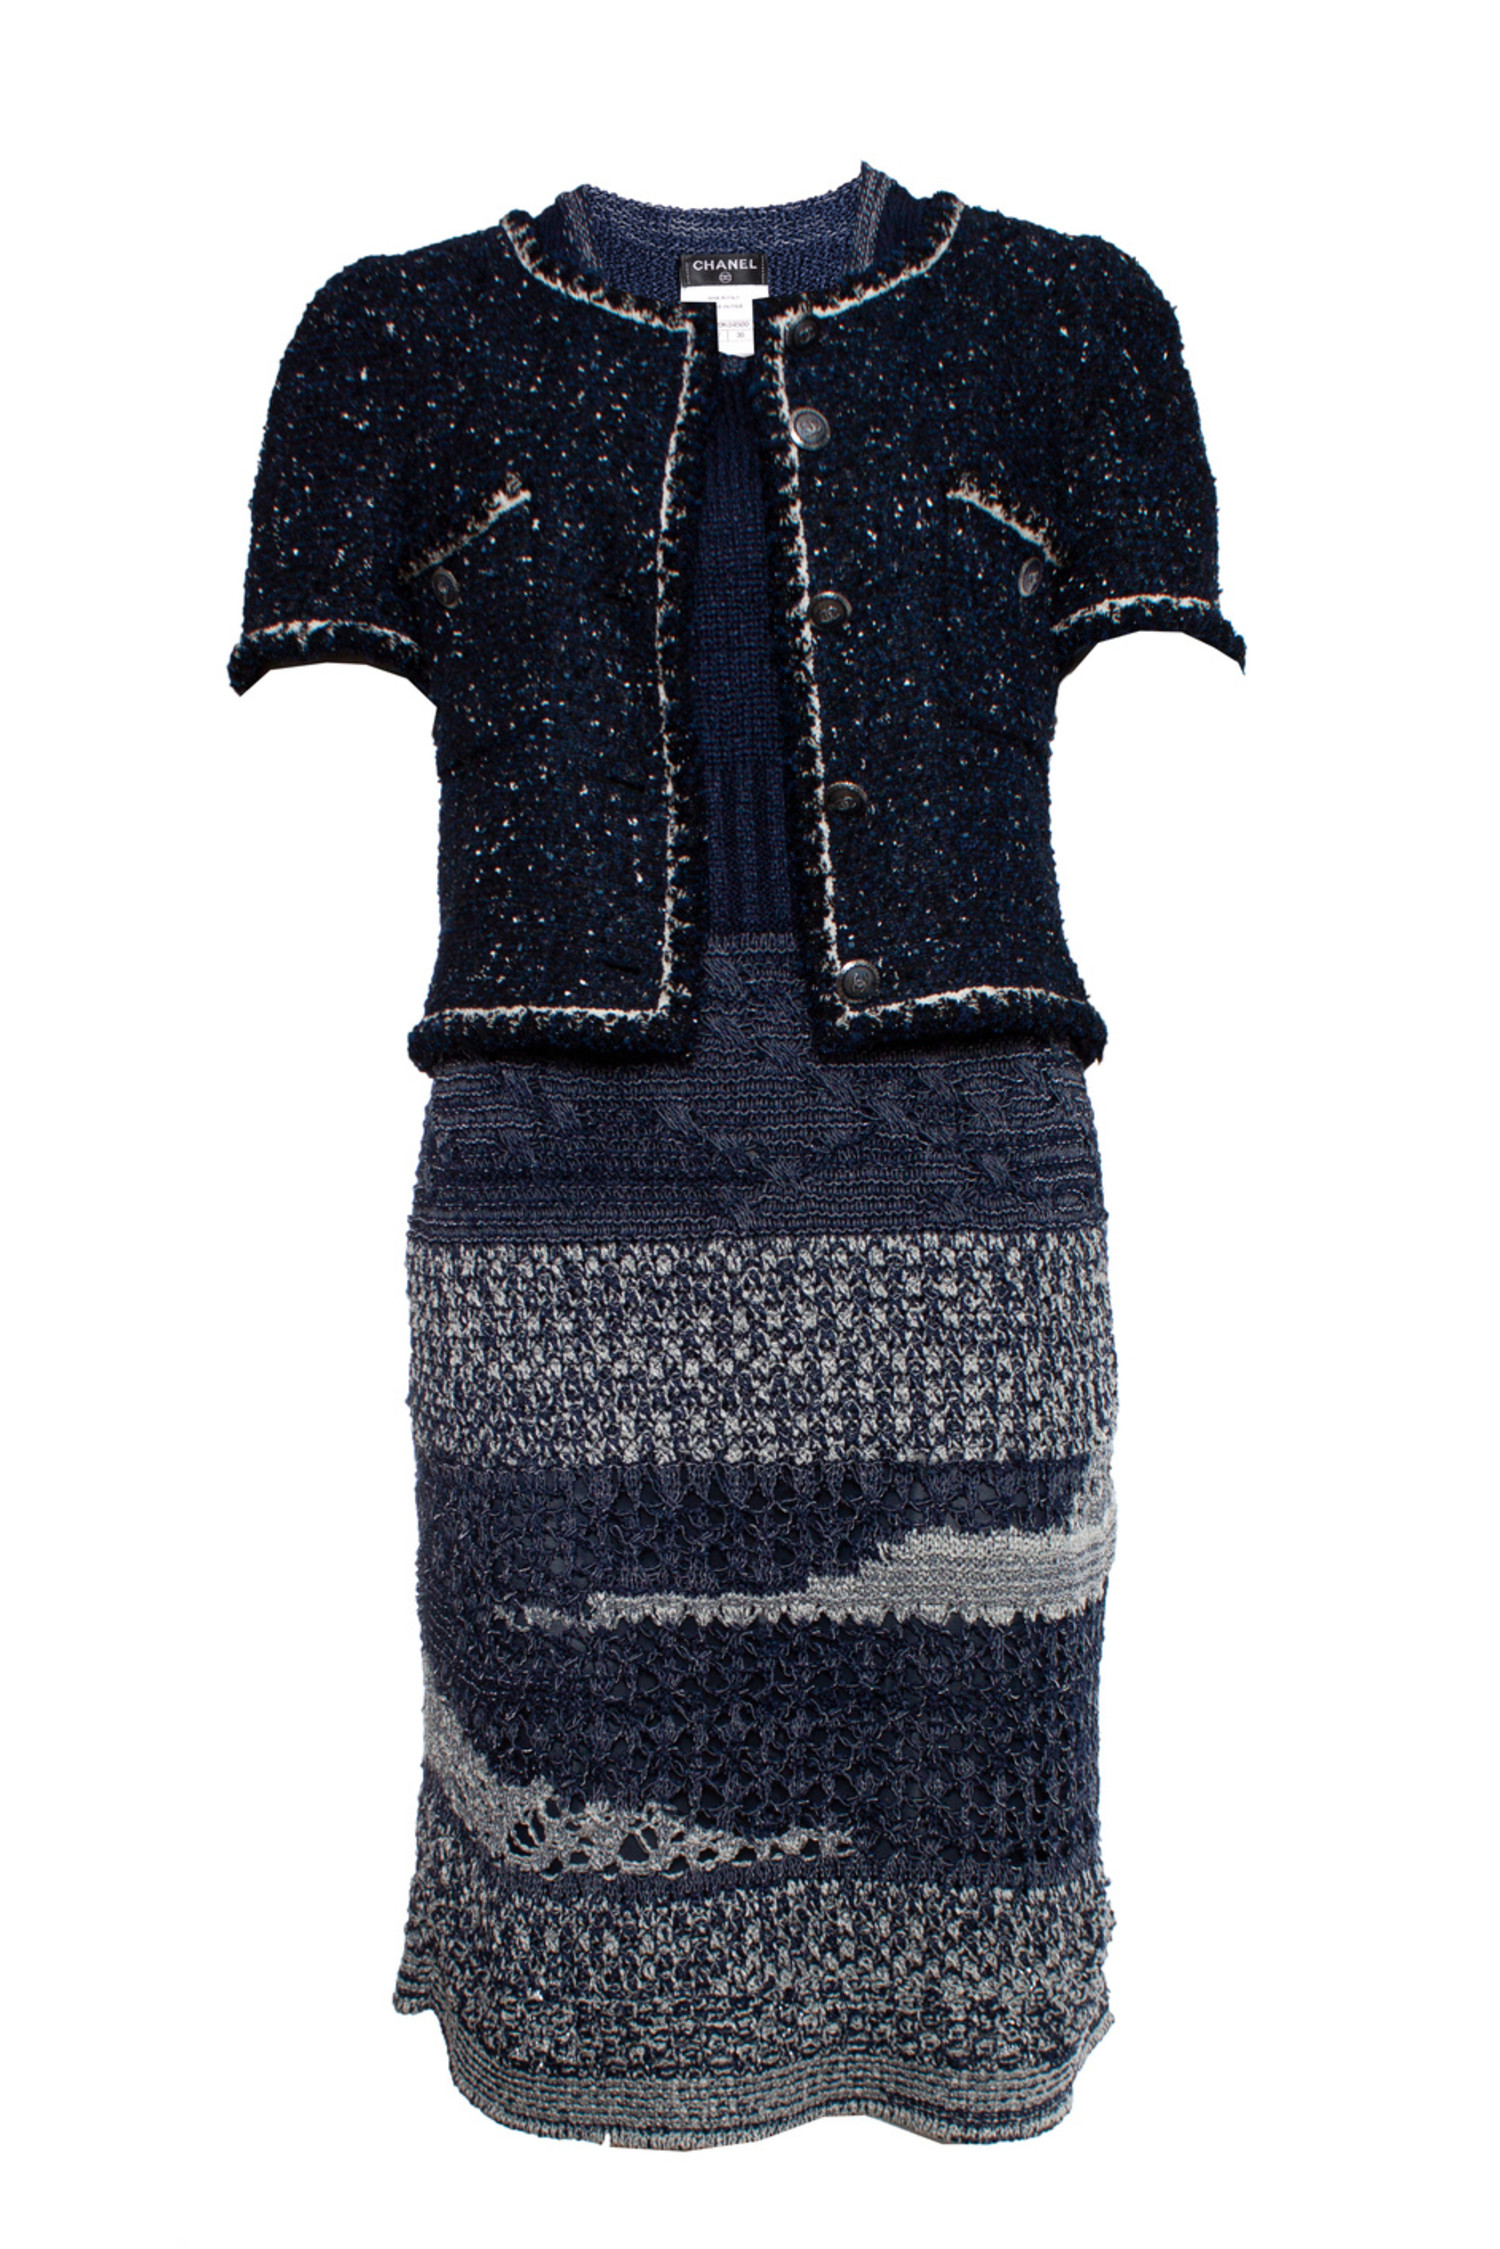 Chanel Blue Tweed Dress  Crop Jacket  Encore Plus